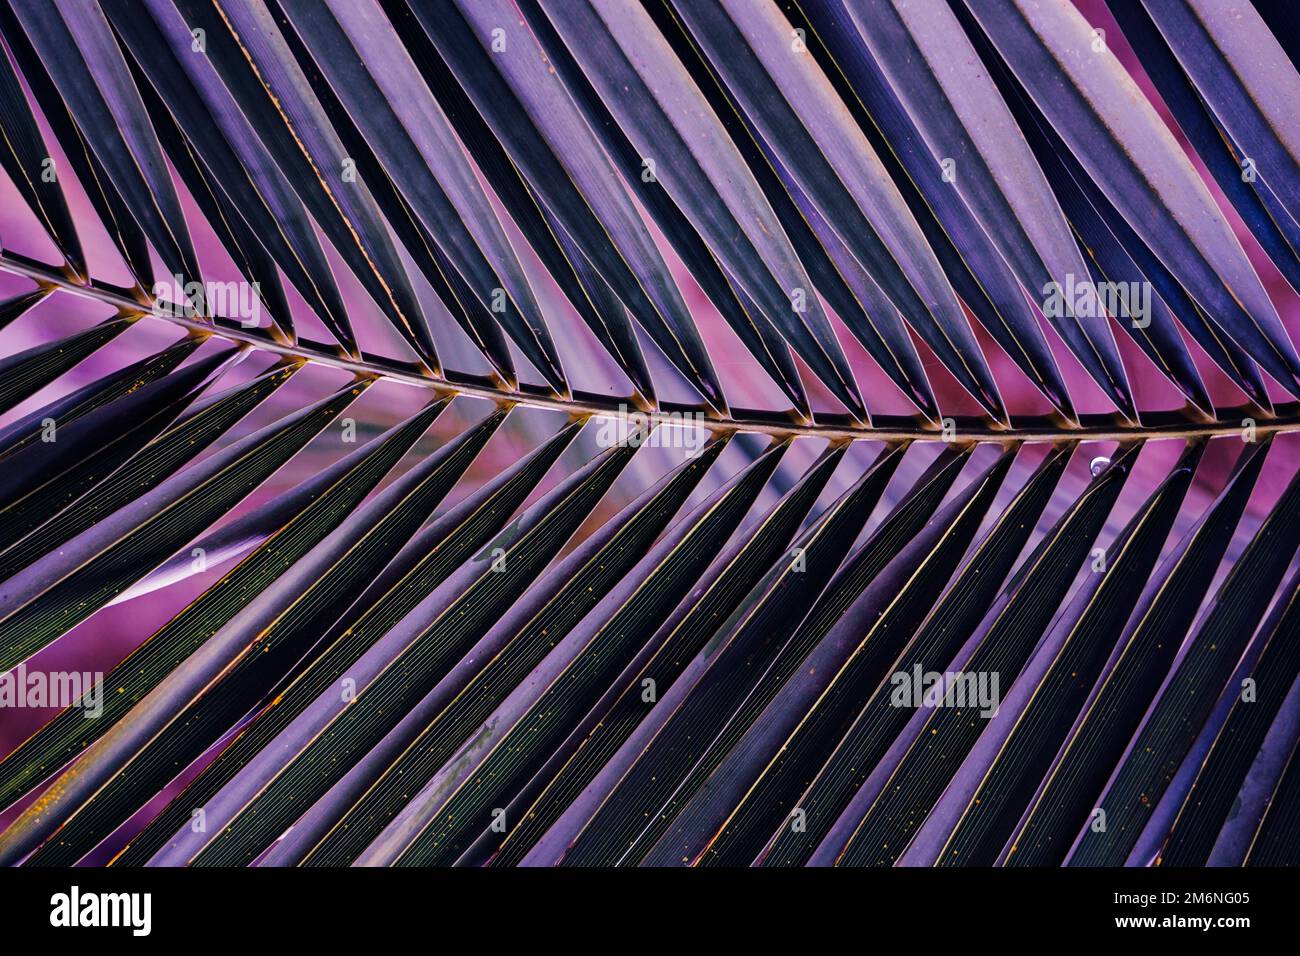 foglie di palma viola, sfondo viola Foto Stock